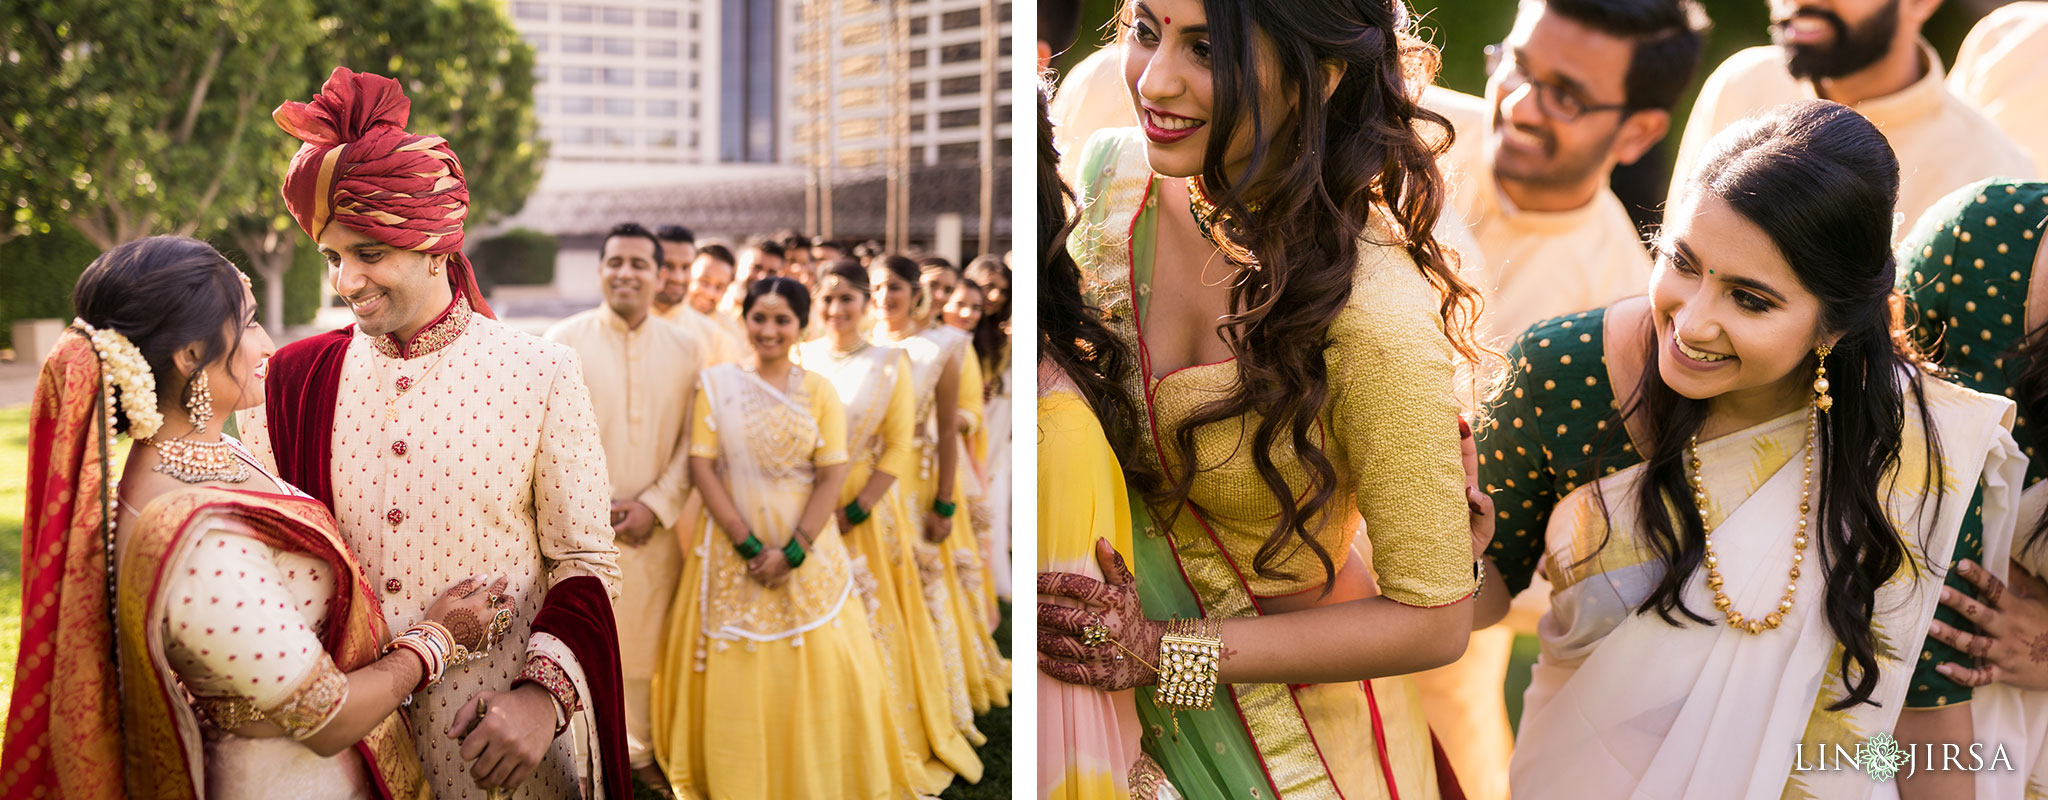 24 hotel irvine indian wedding party photography